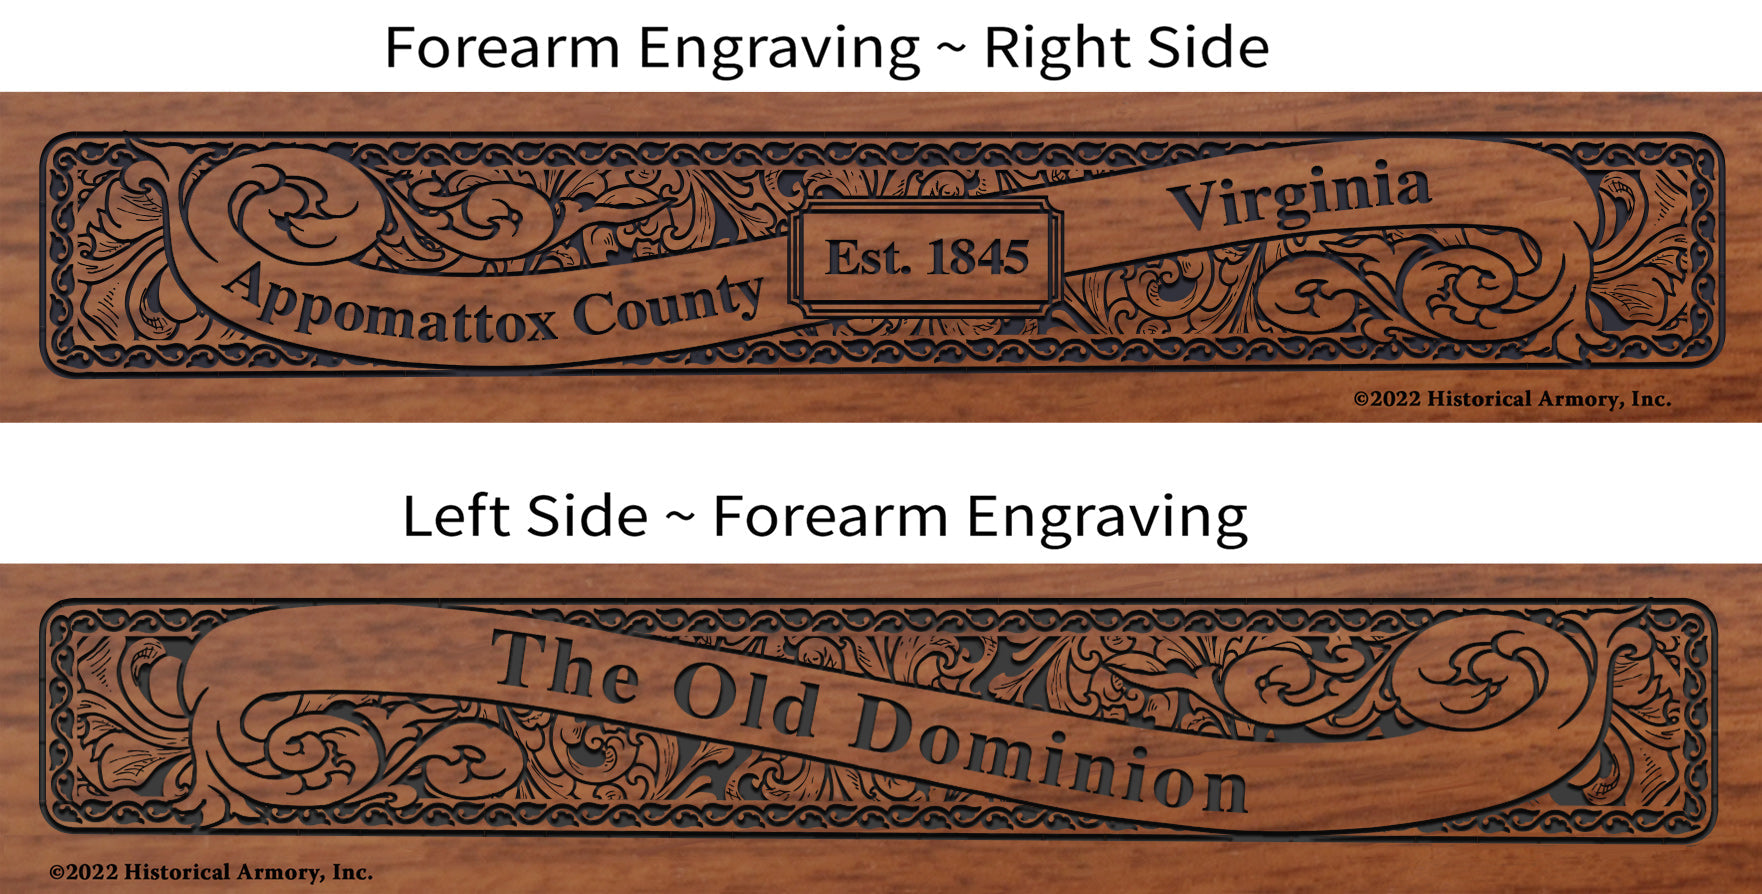 Appomattox County Virginia Engraved Rifle Forearm